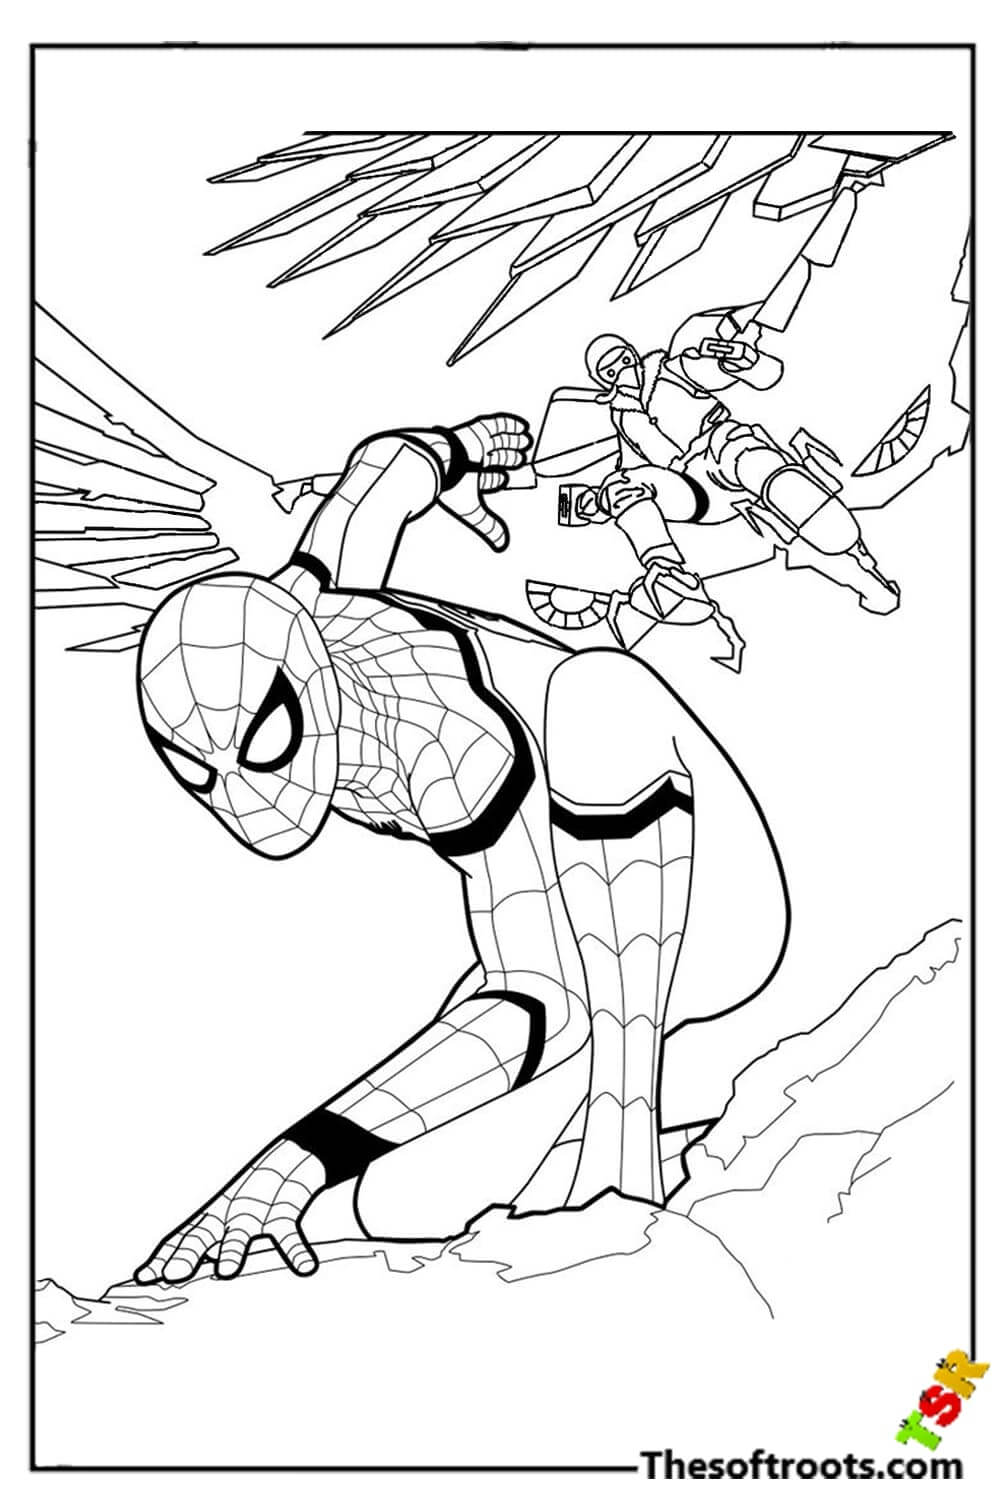 Spiderman vs. villain coloring pages